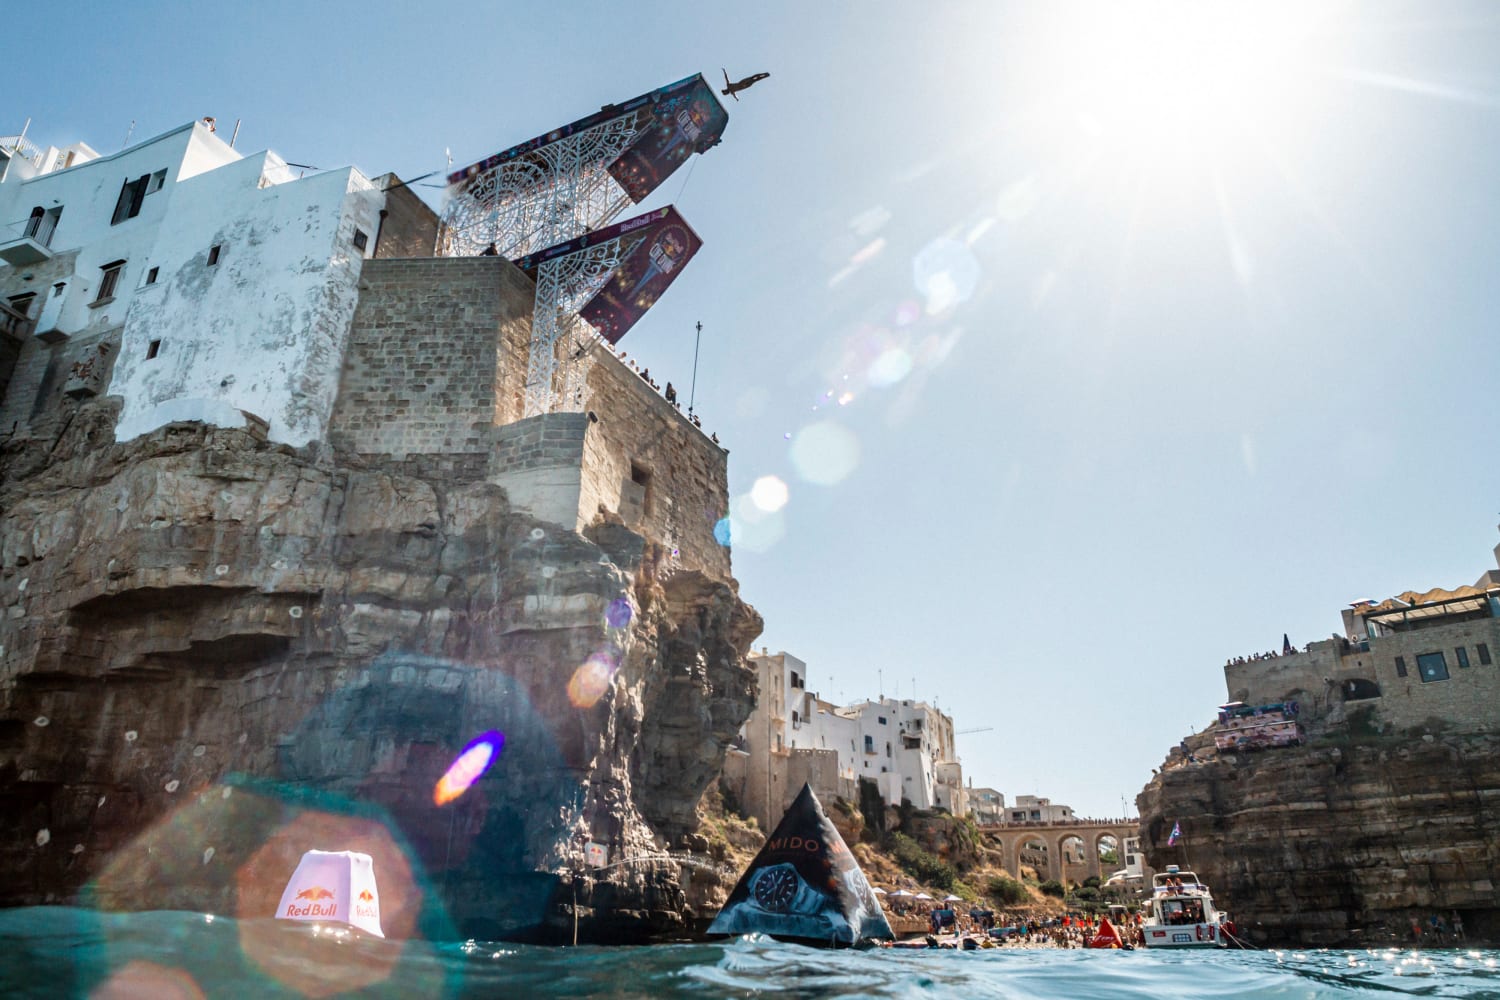 Red Bull Cliff Diving 2021: Polignano Mare event info